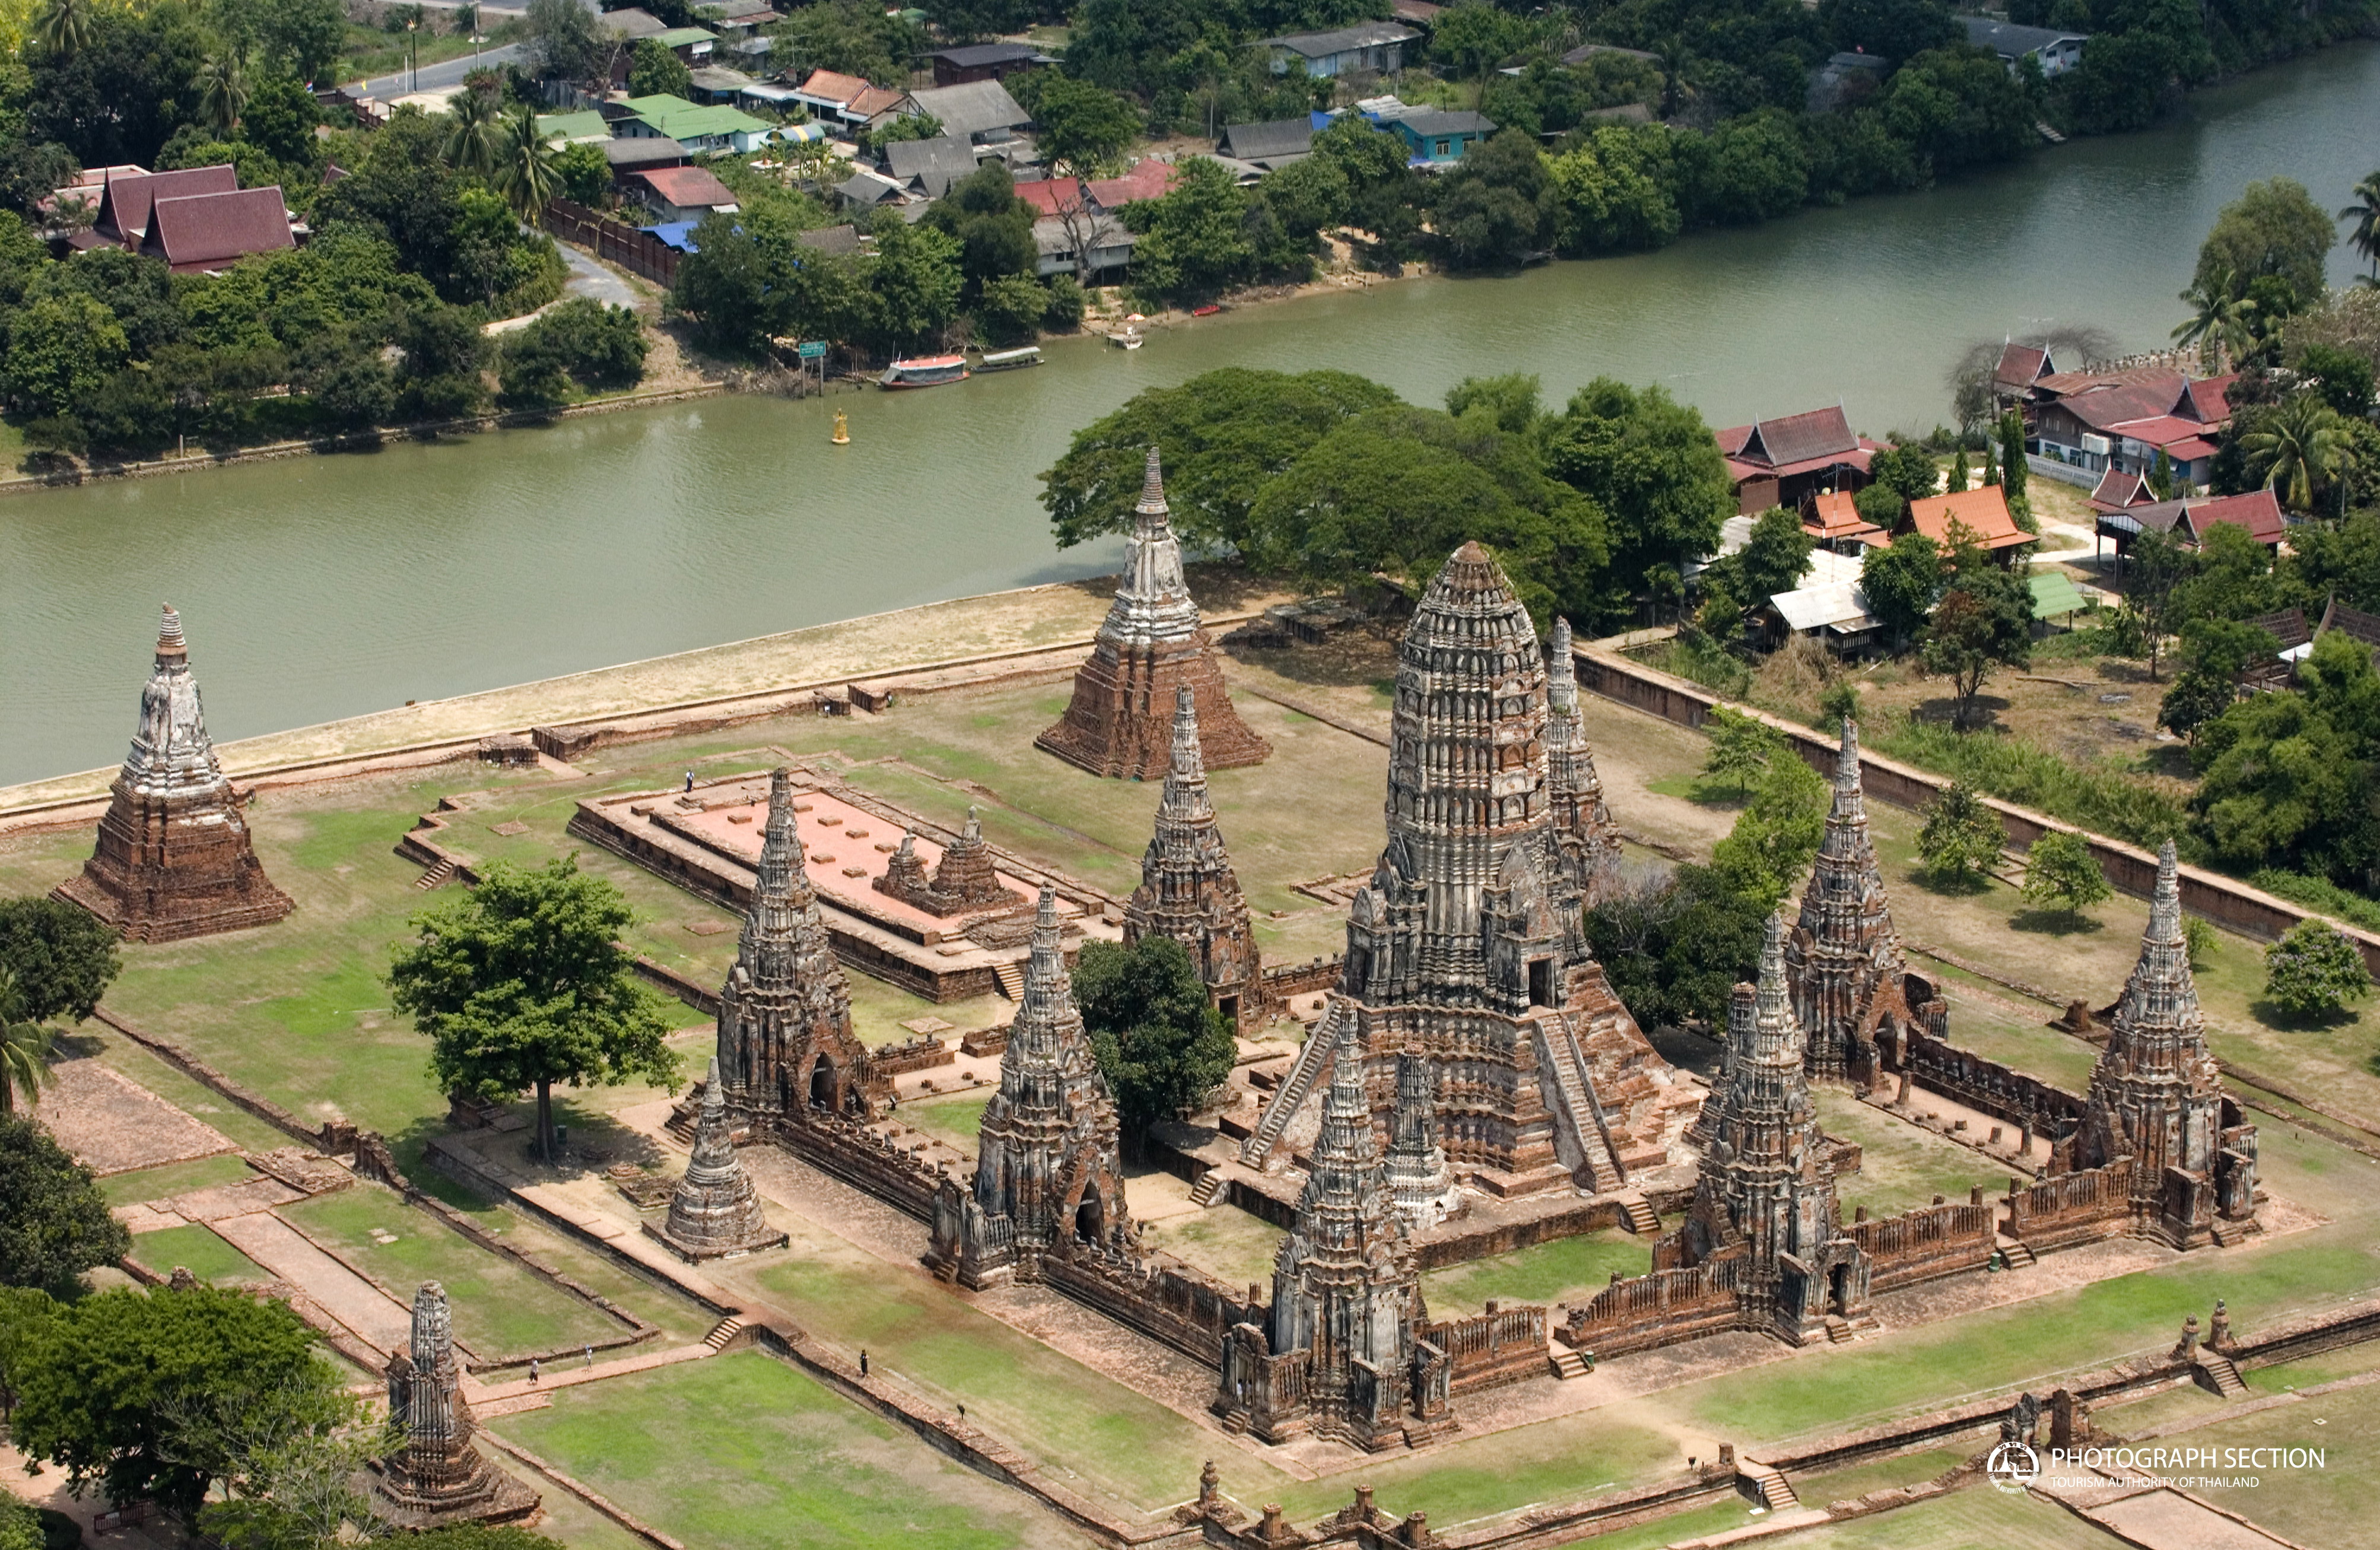 Ayutthaya, Wat Chaiwattanaram